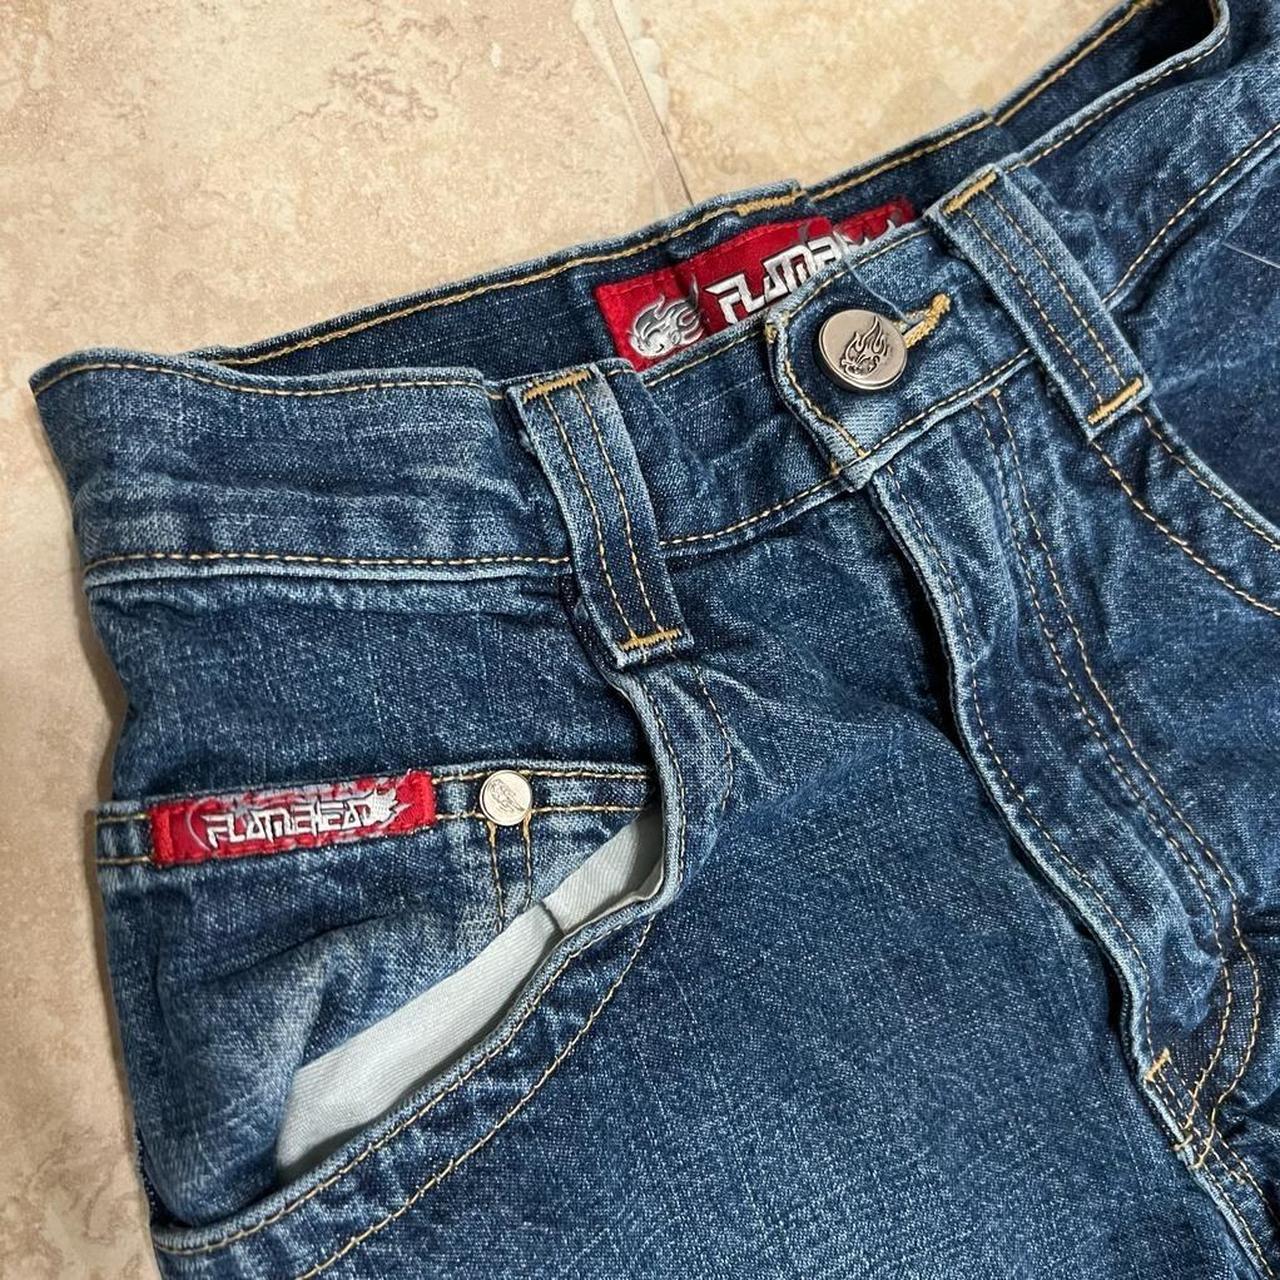 Vintage JNCO Flamehead Jeans Size 8 As seen in... - Depop